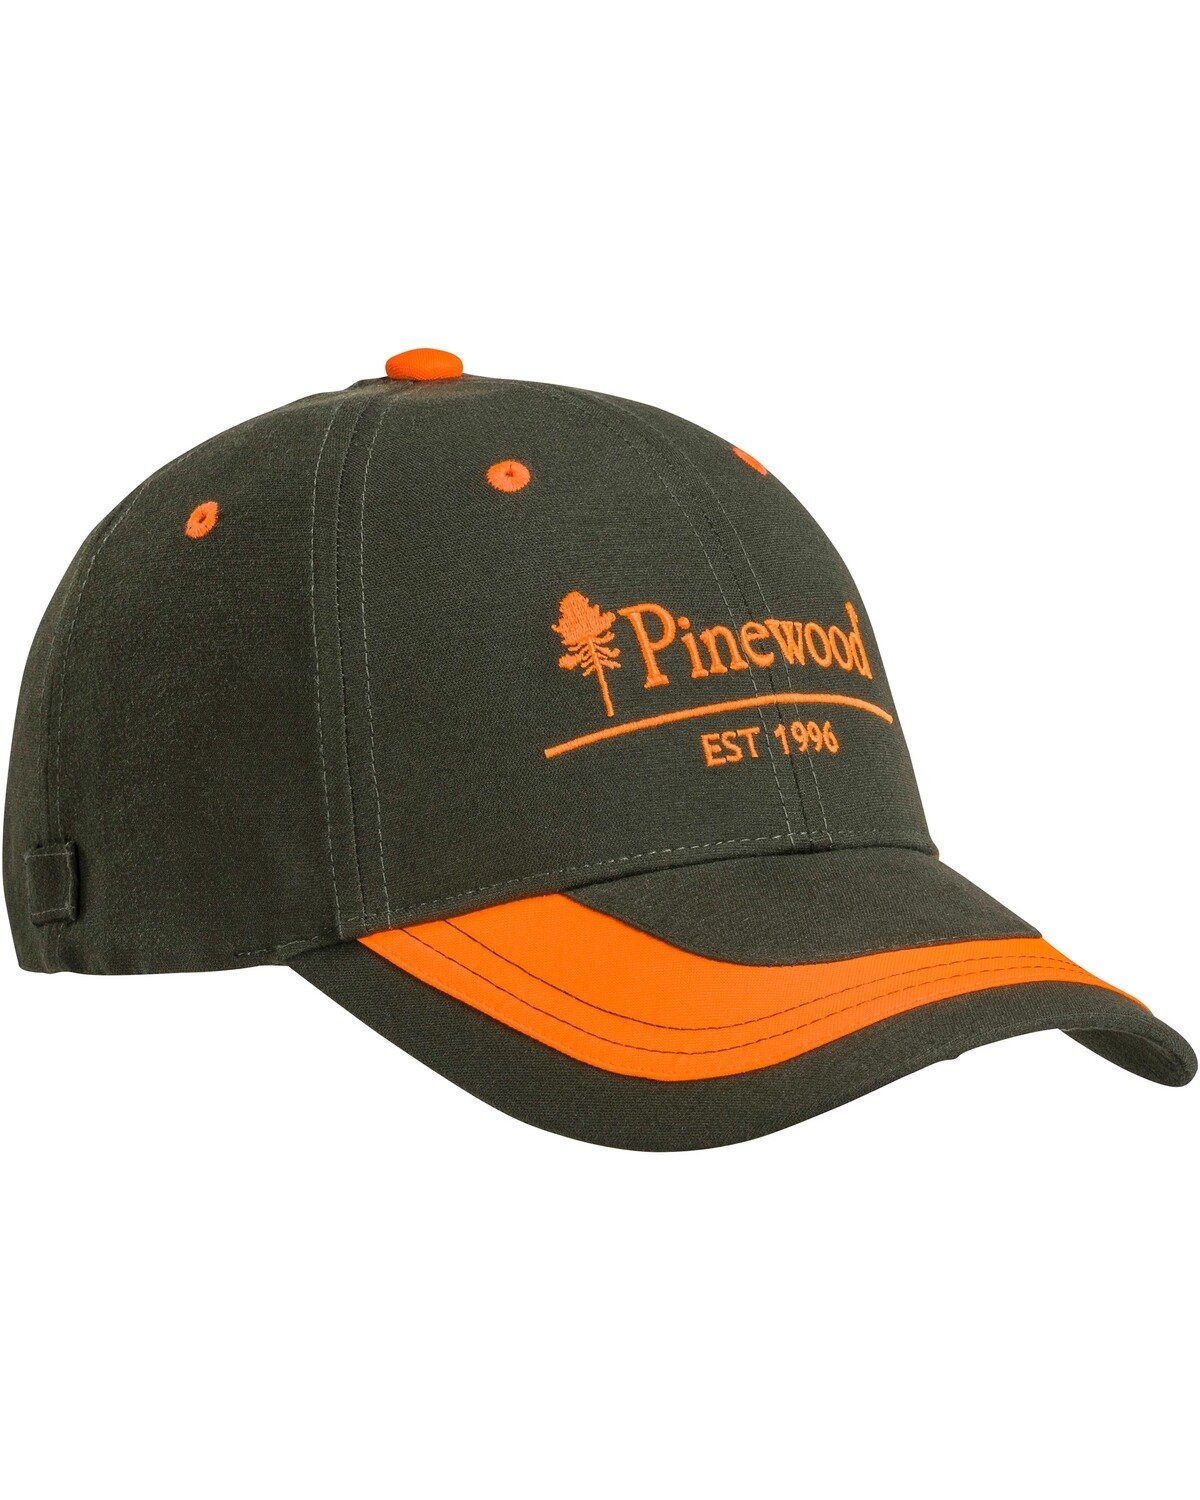 Pinewood Baseball Cap Cap 2-Colour Oliv/Orange